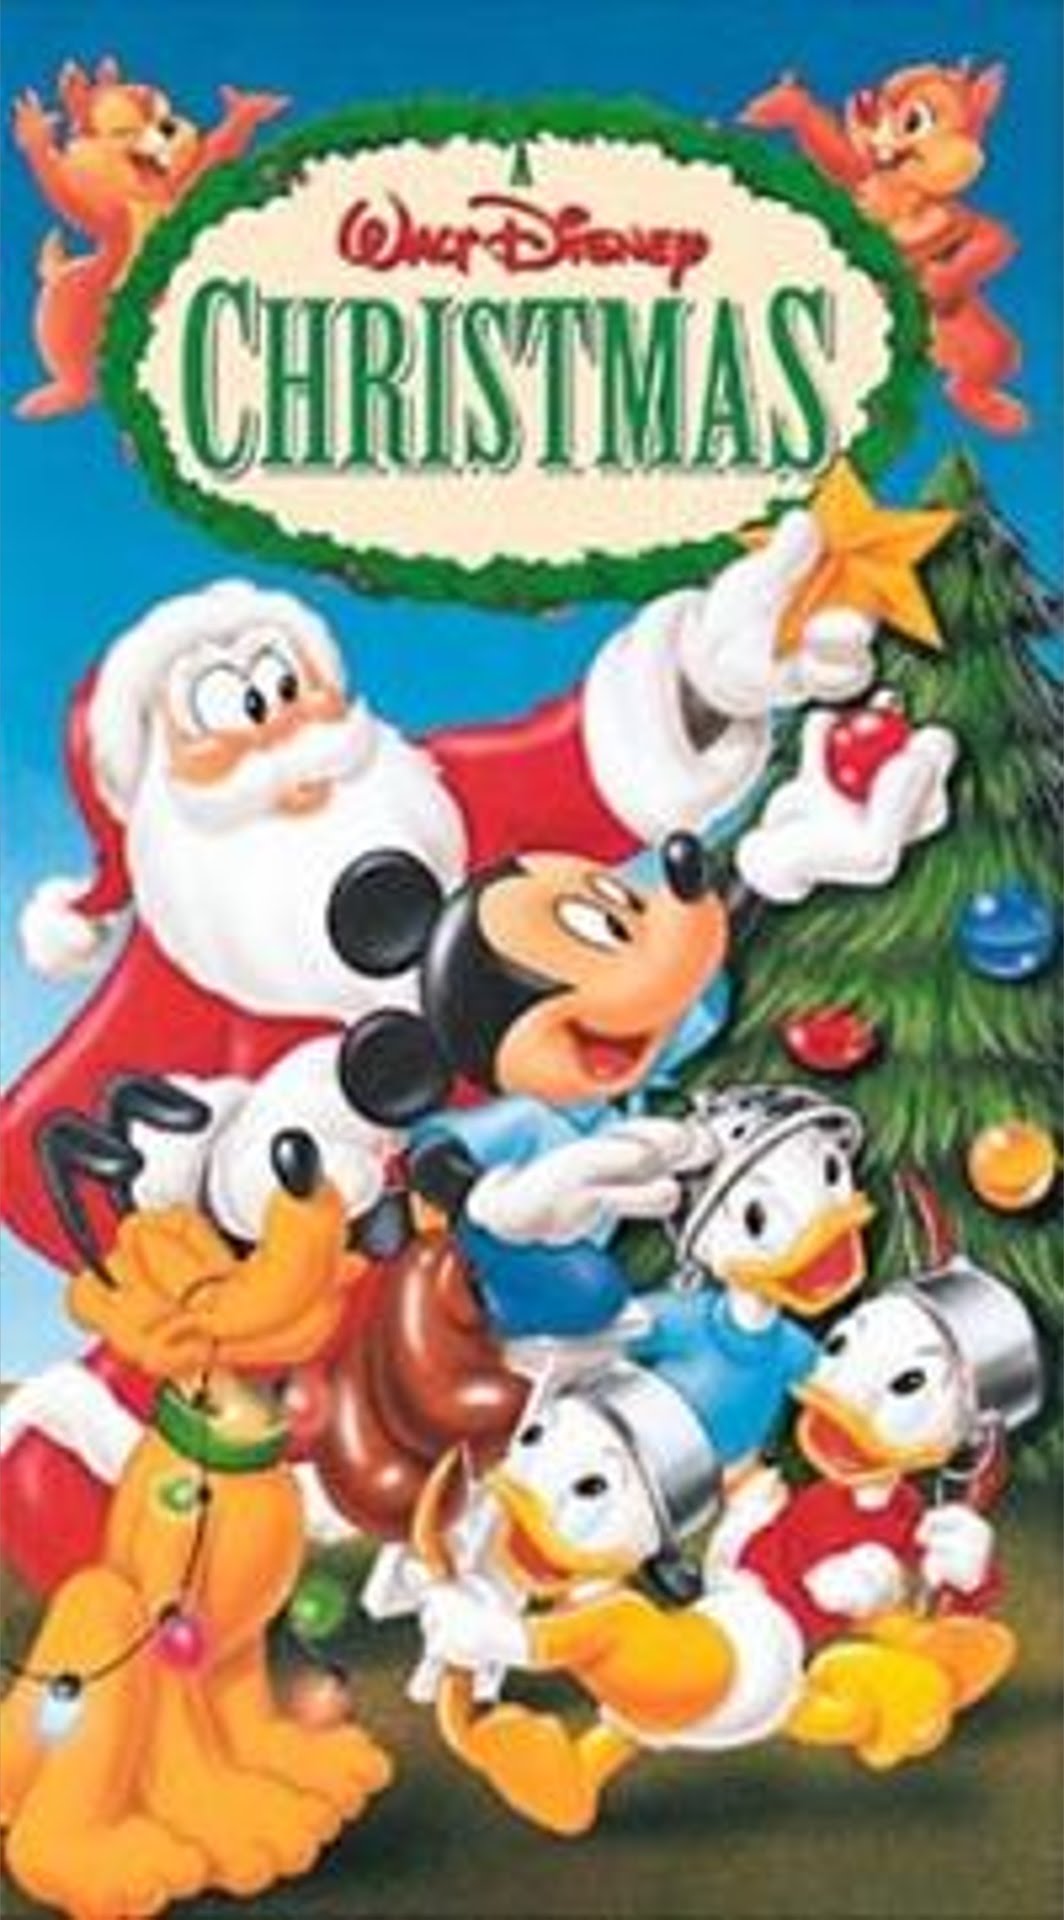 A Disney Christmas Gift - 224 AS - 712257224060- Disney LaserDisc